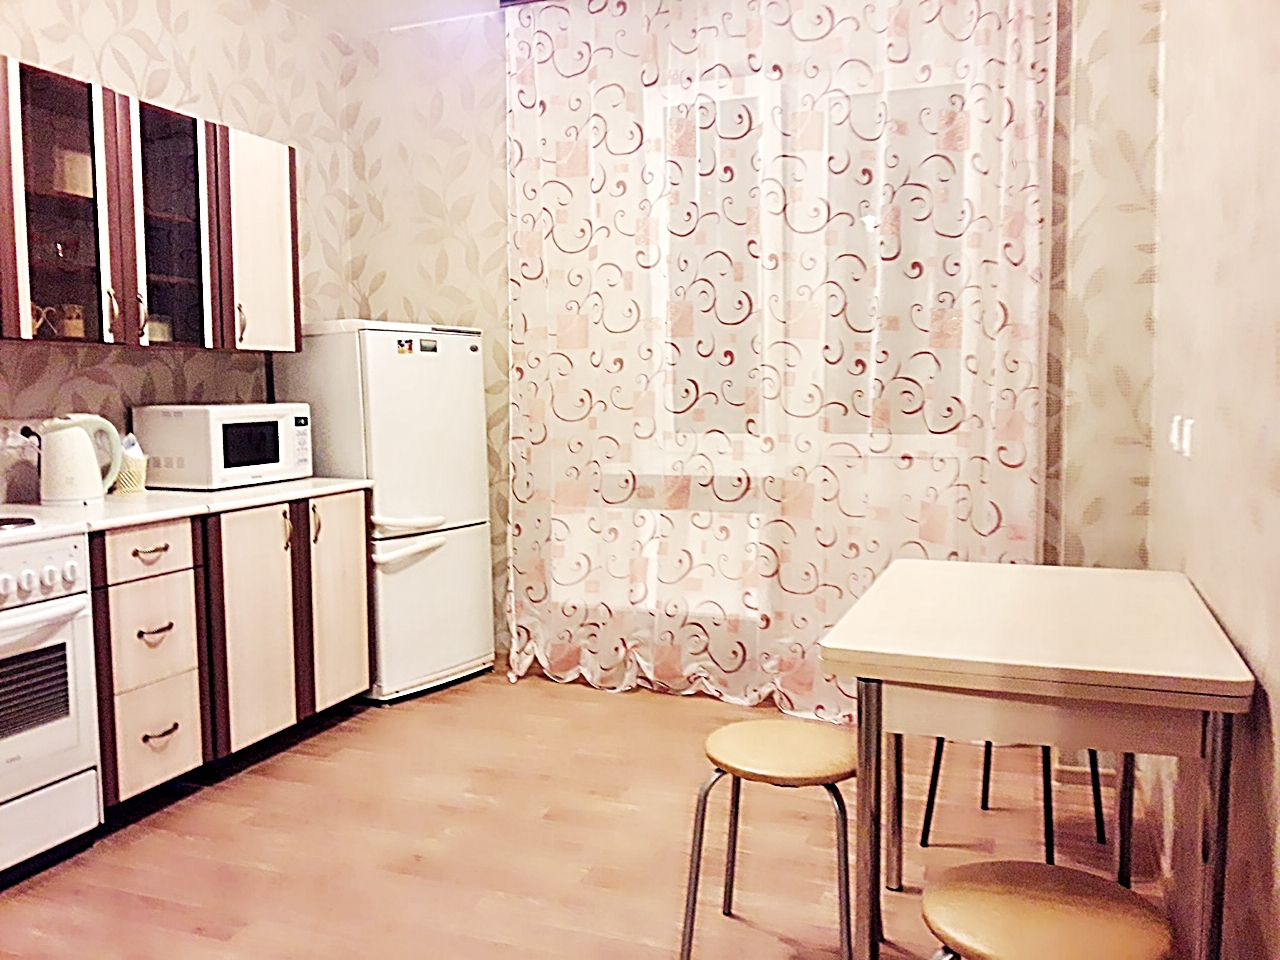 Сниму квартиру ленинском районе недорого саратов